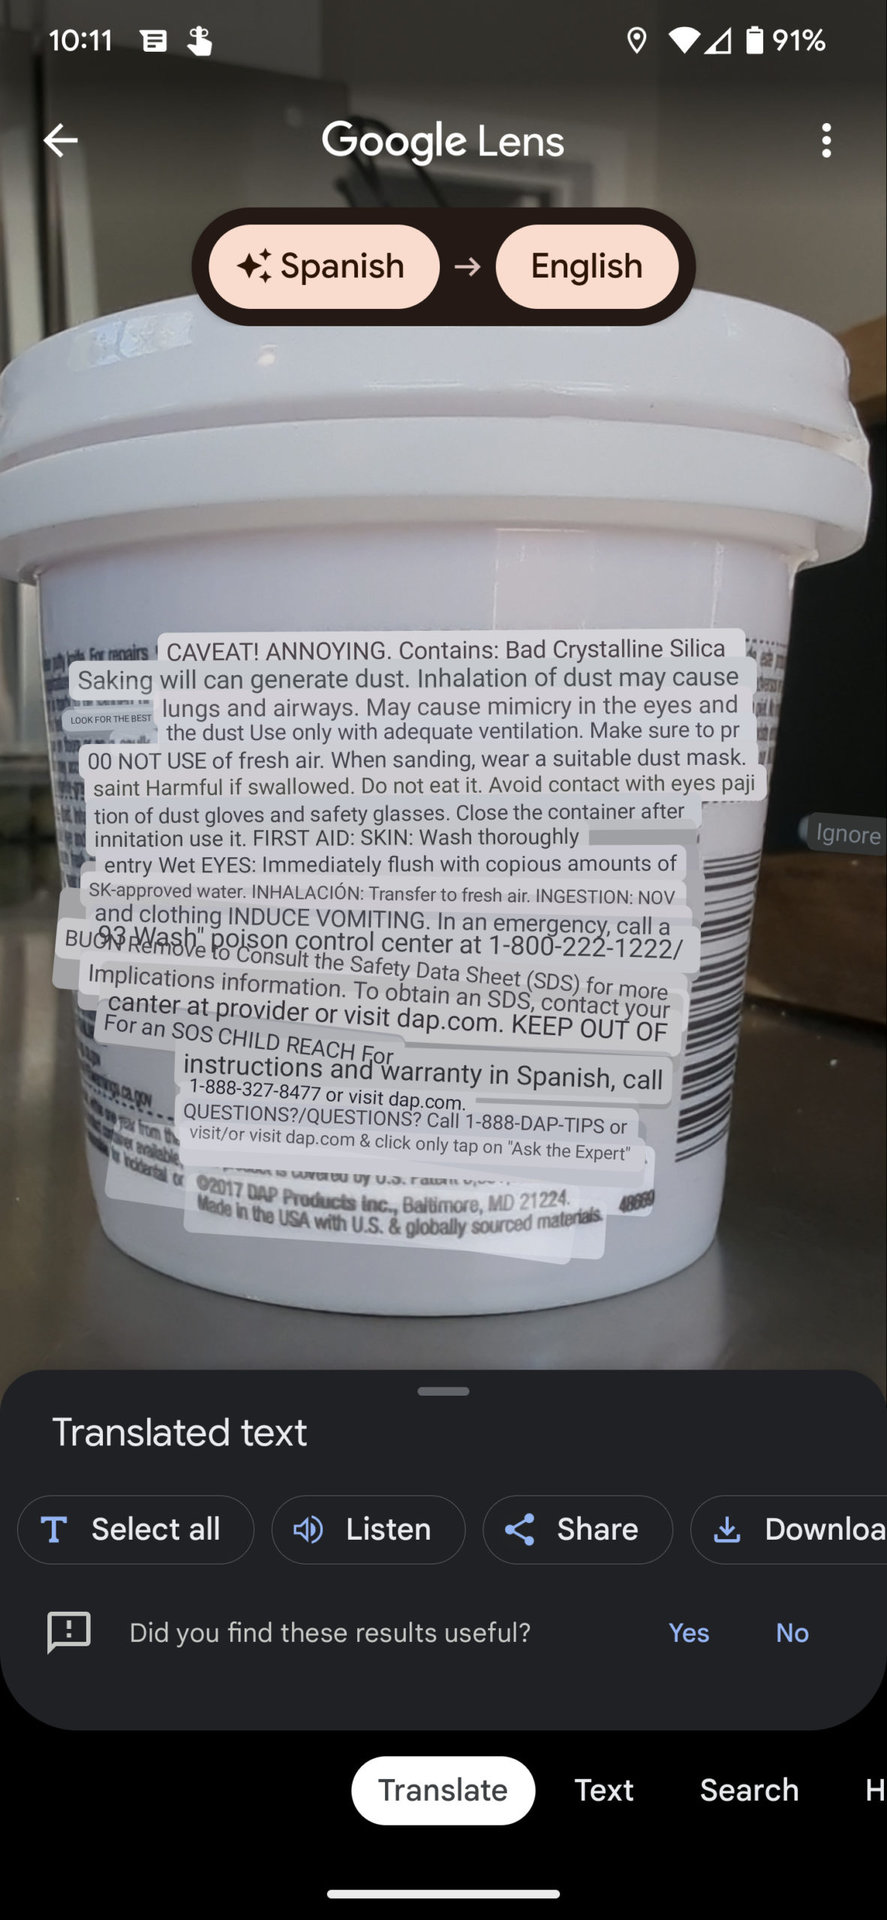 Live Translate in Google Lens